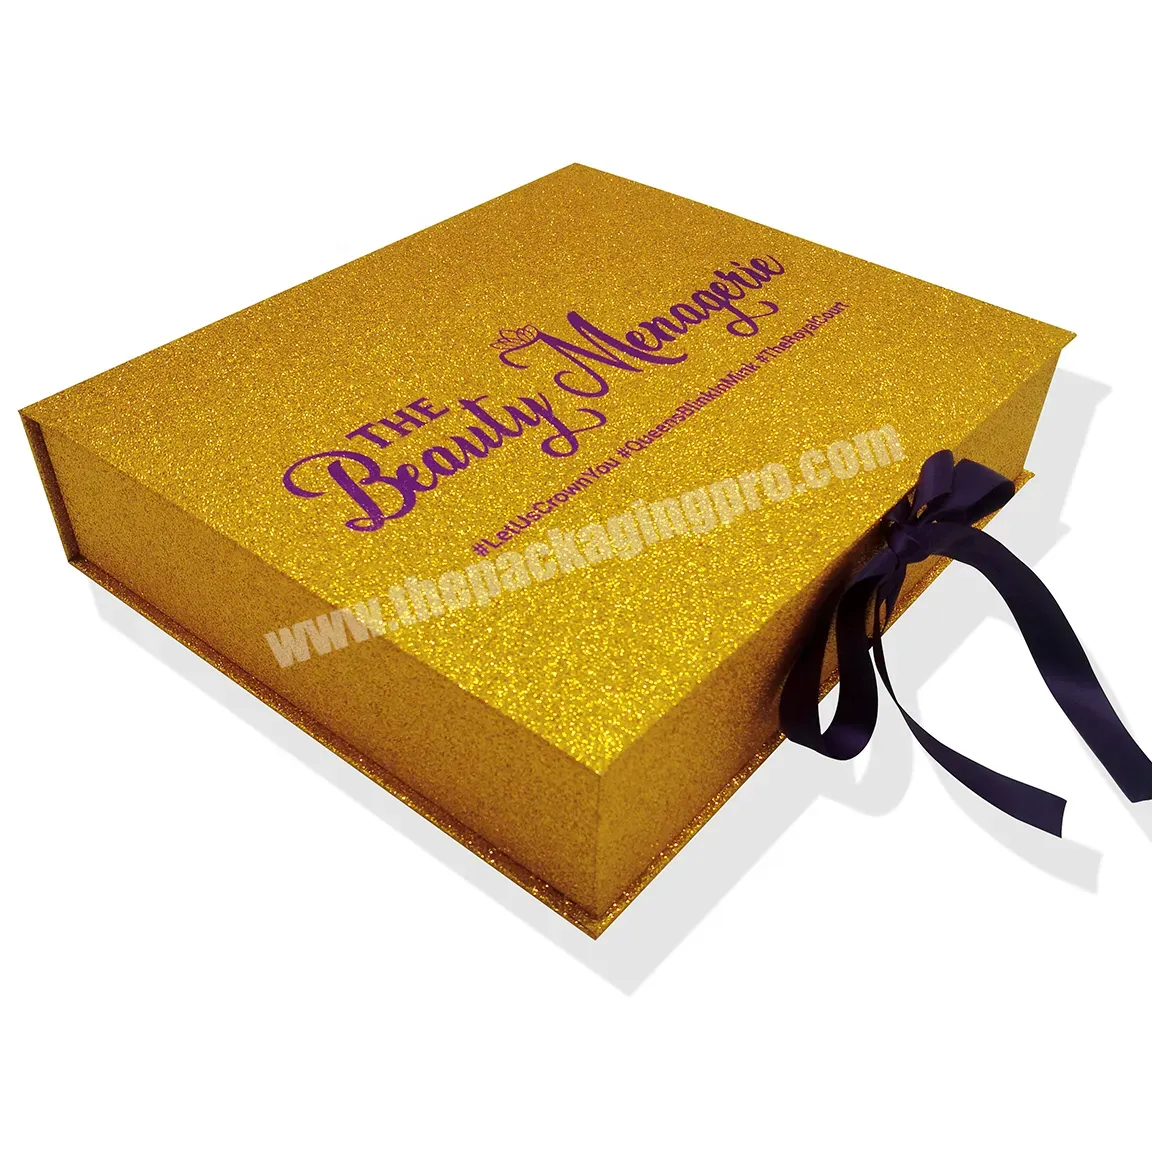 Glitter Gold Box Gift Box With Silk Satin Insert - Buy Wigs Box Luxury,Human Hair Extensions Packaging Box,Gift Box With Ribbon And Satin Insert.